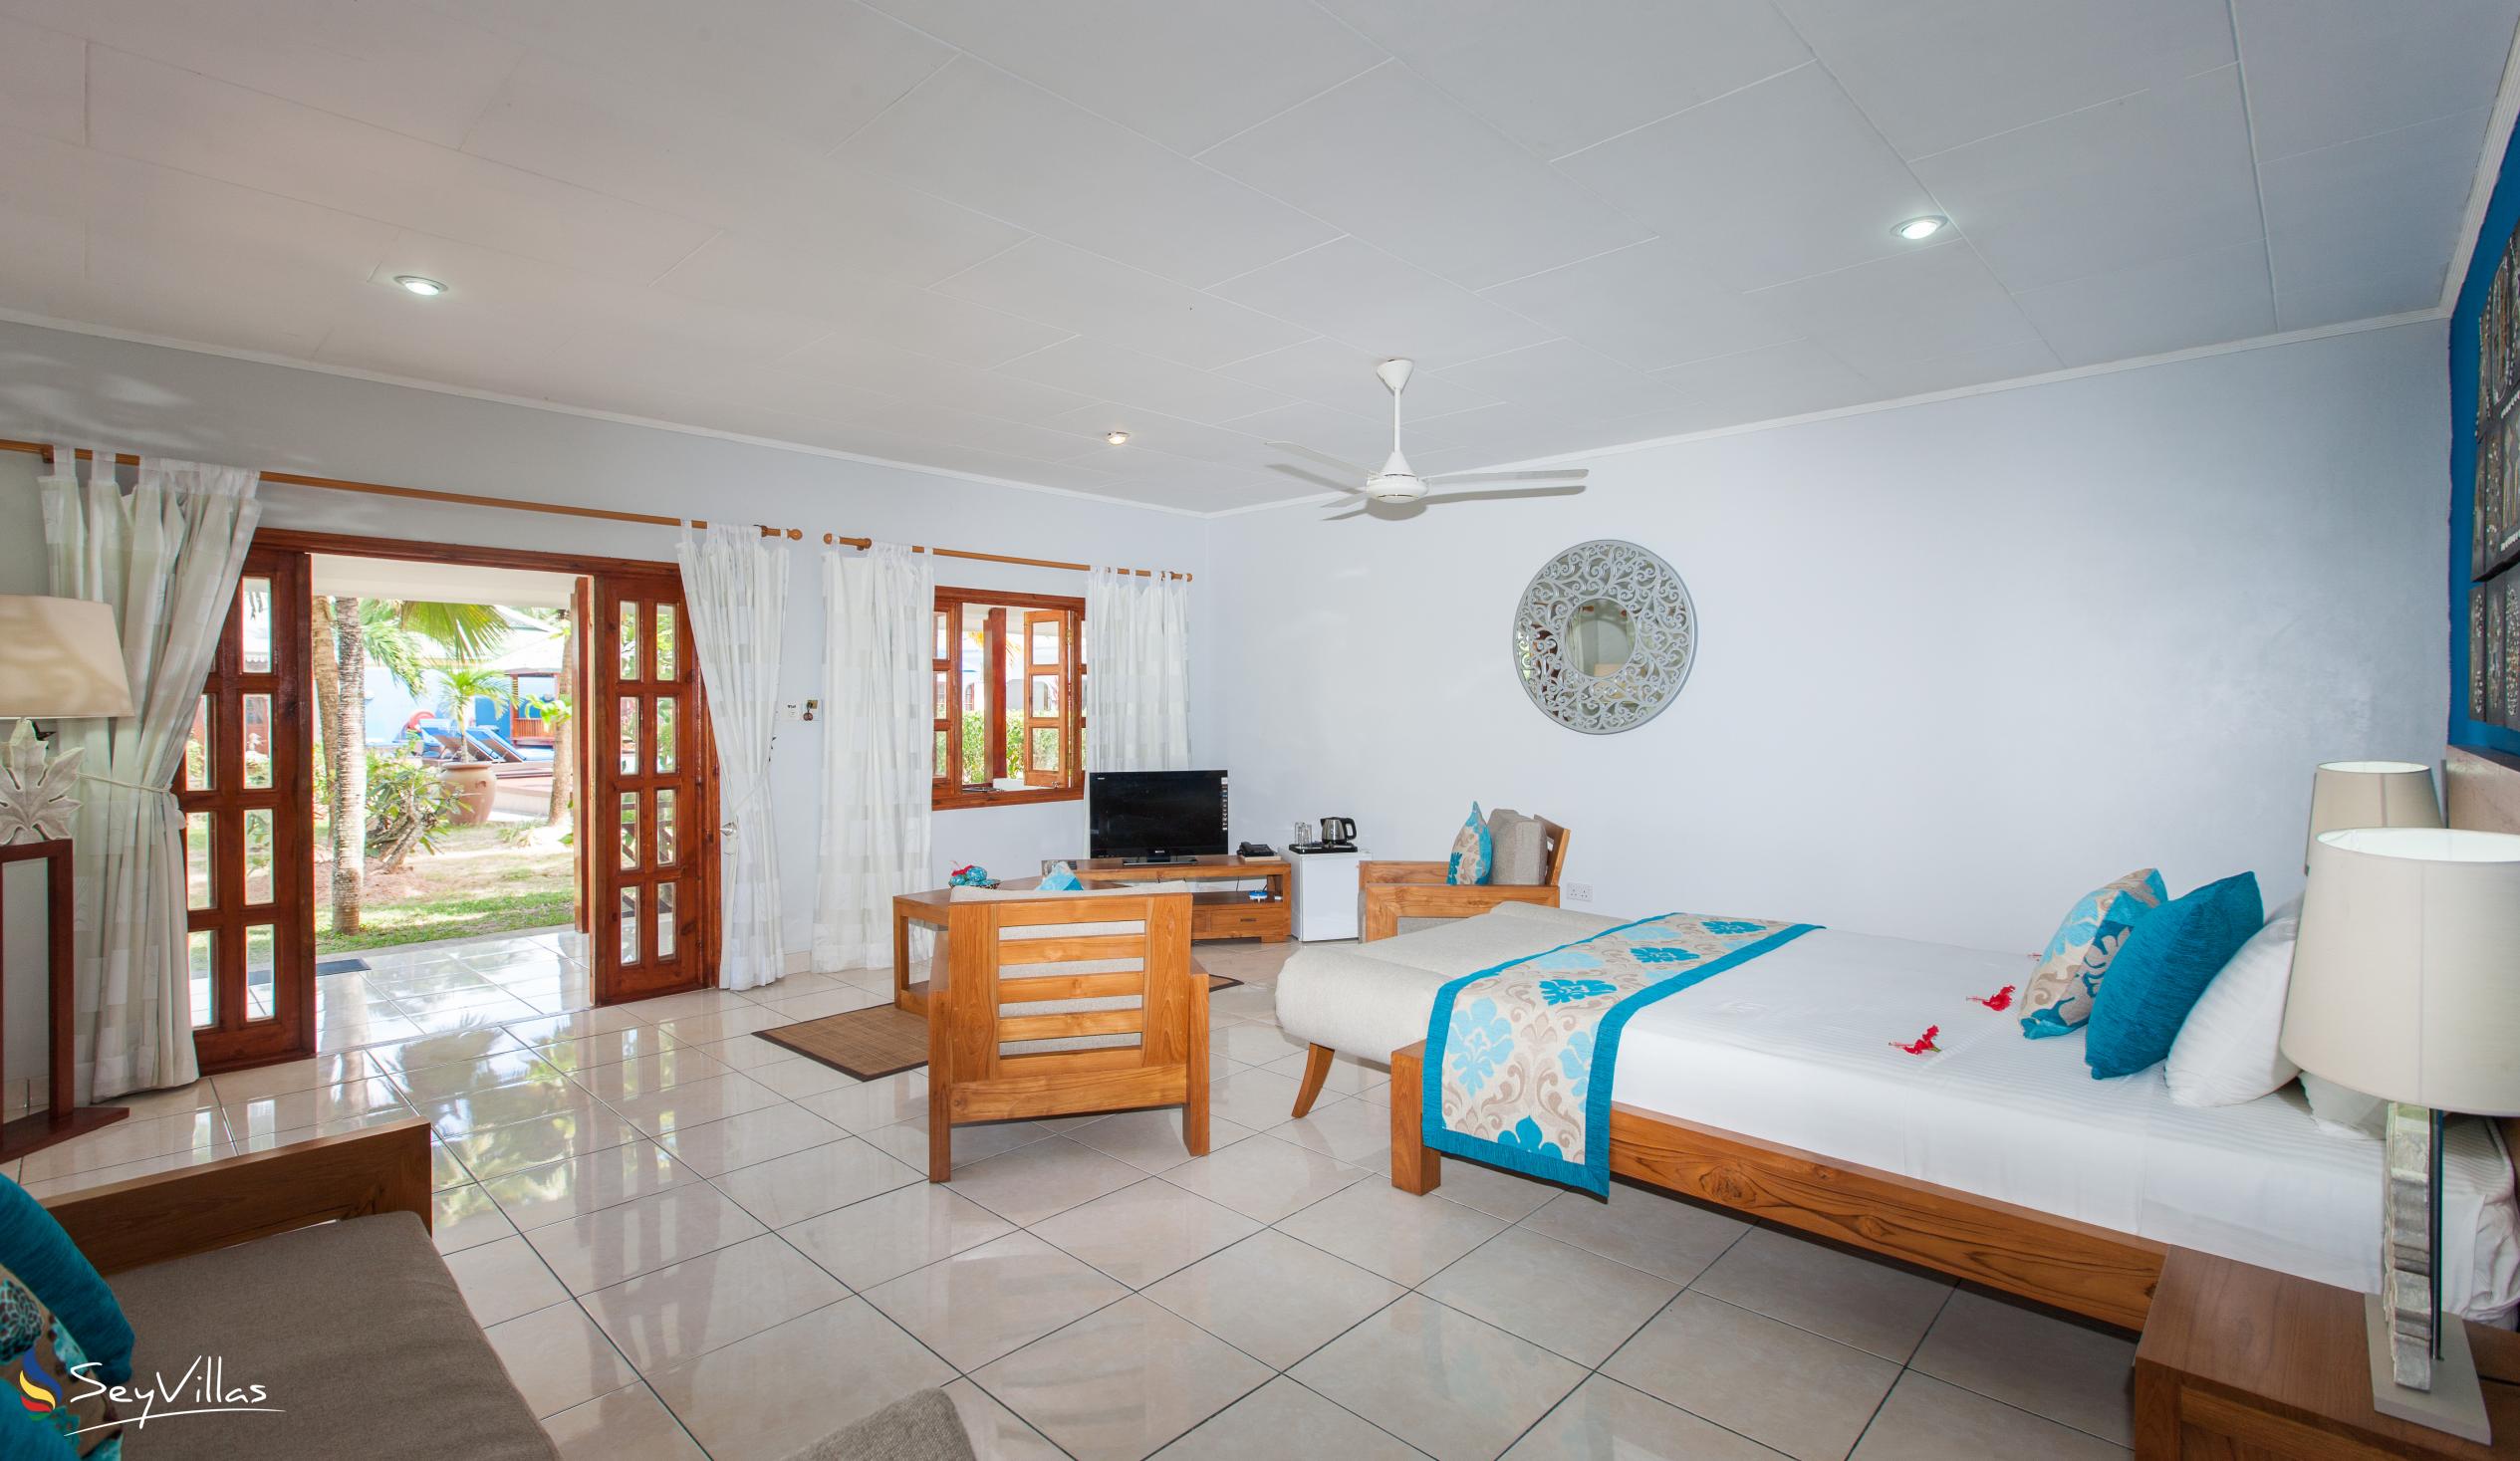 Foto 36: Villas de Mer - Junior Suite - Praslin (Seychellen)